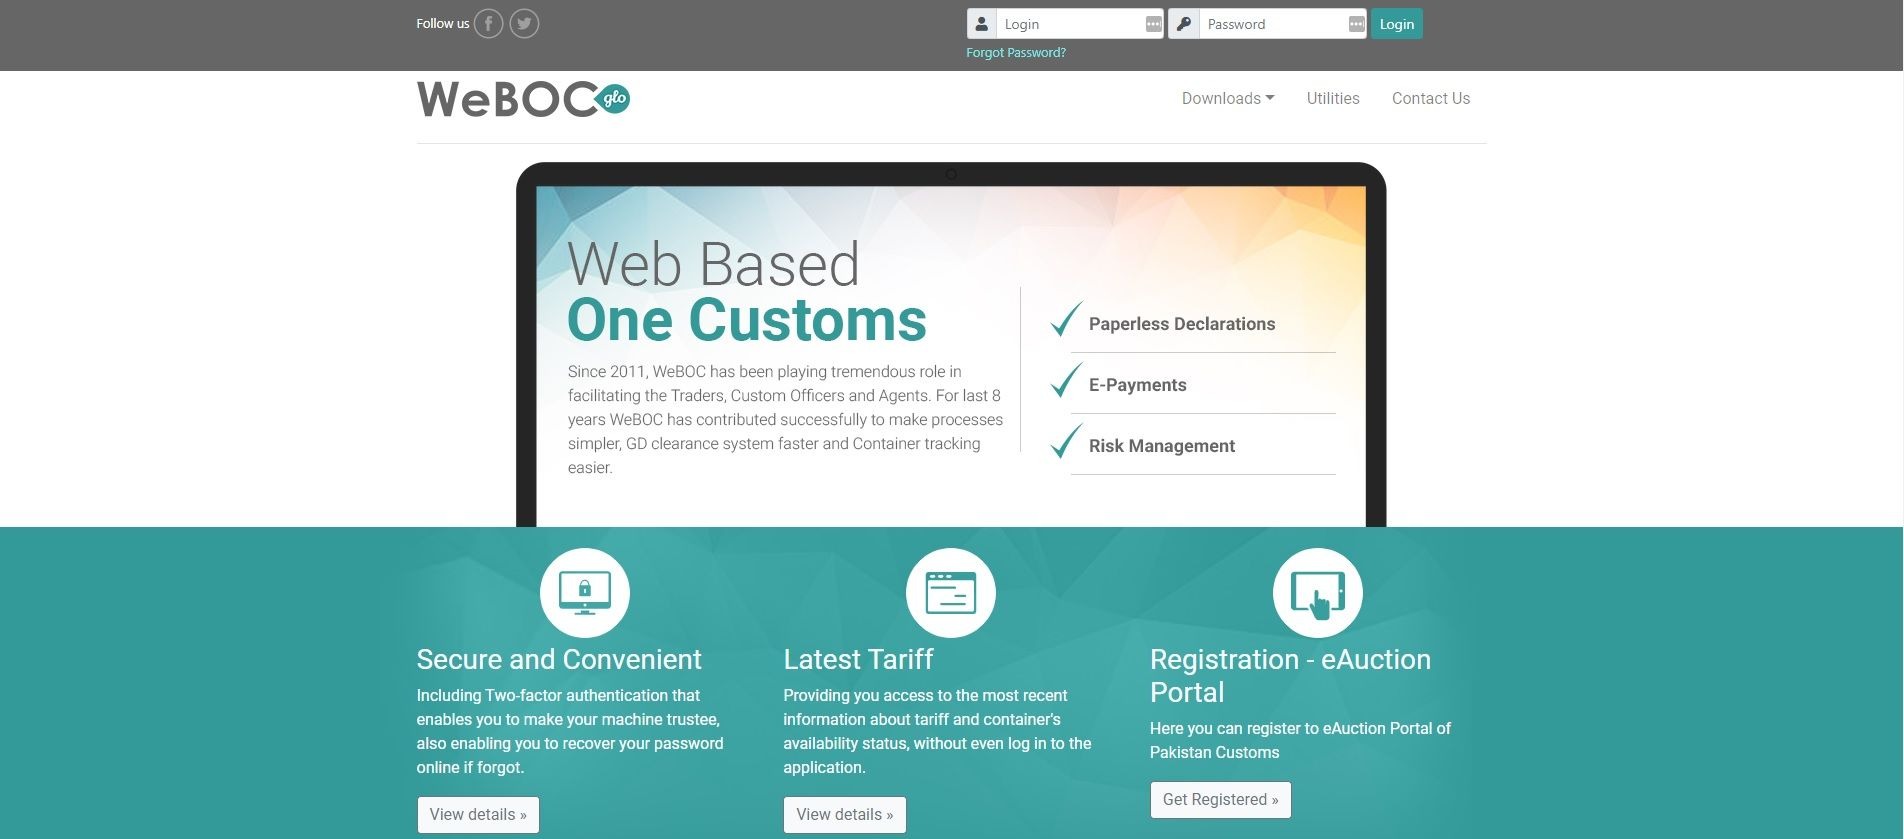 Weboc Login Page (Pakistan Customs)